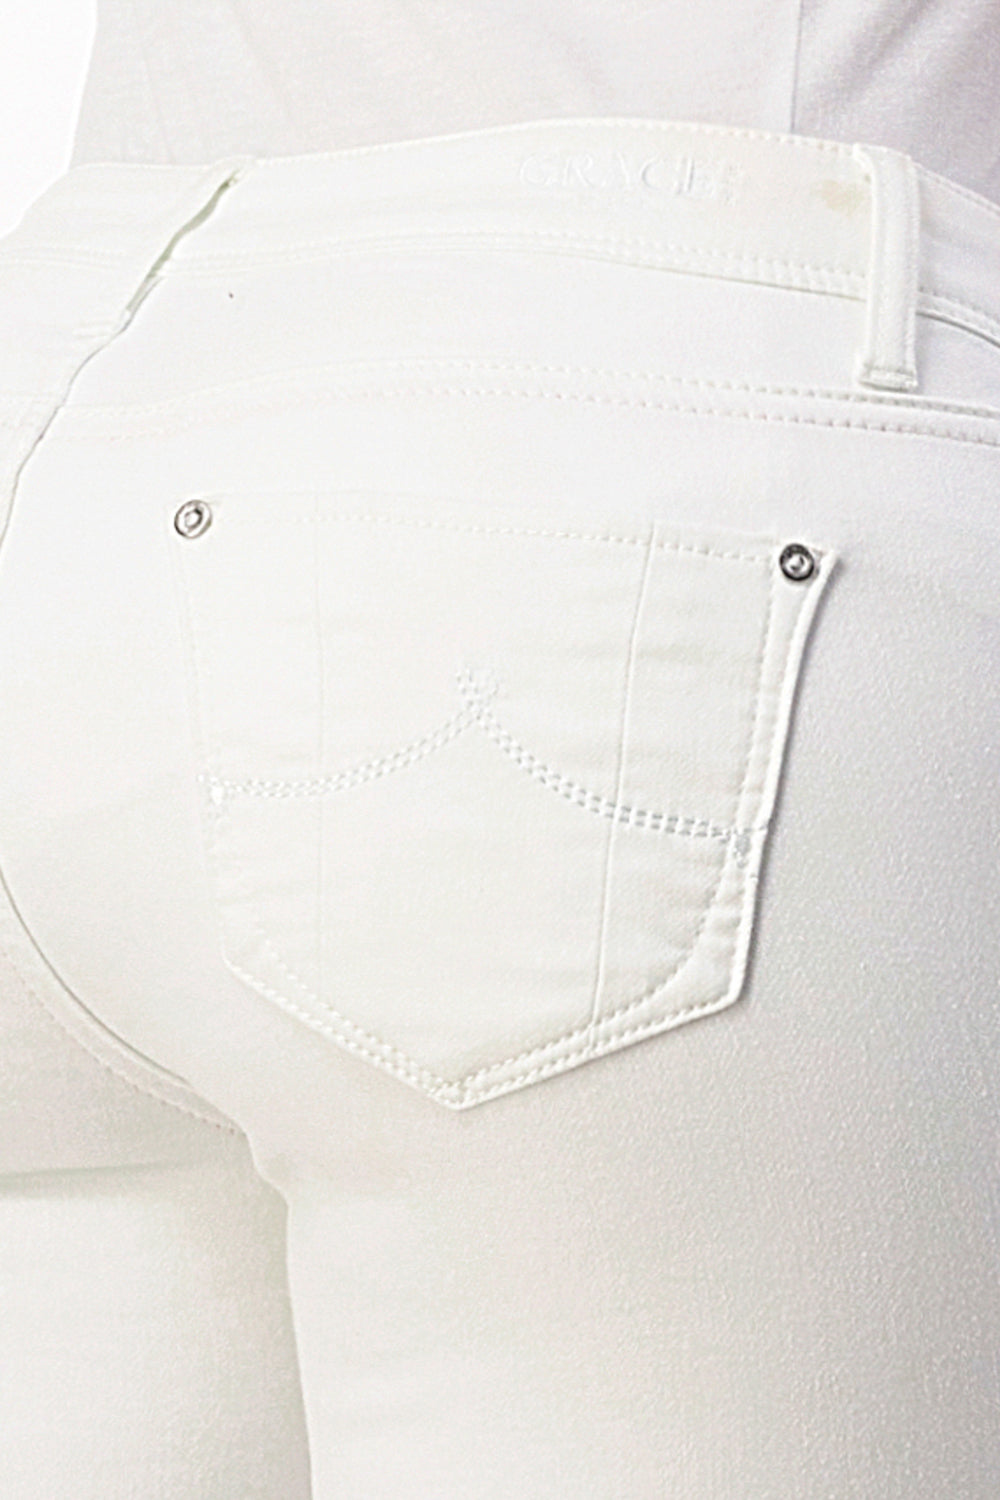 Basic White Soft Denim Mid Rise Skinny Jeans